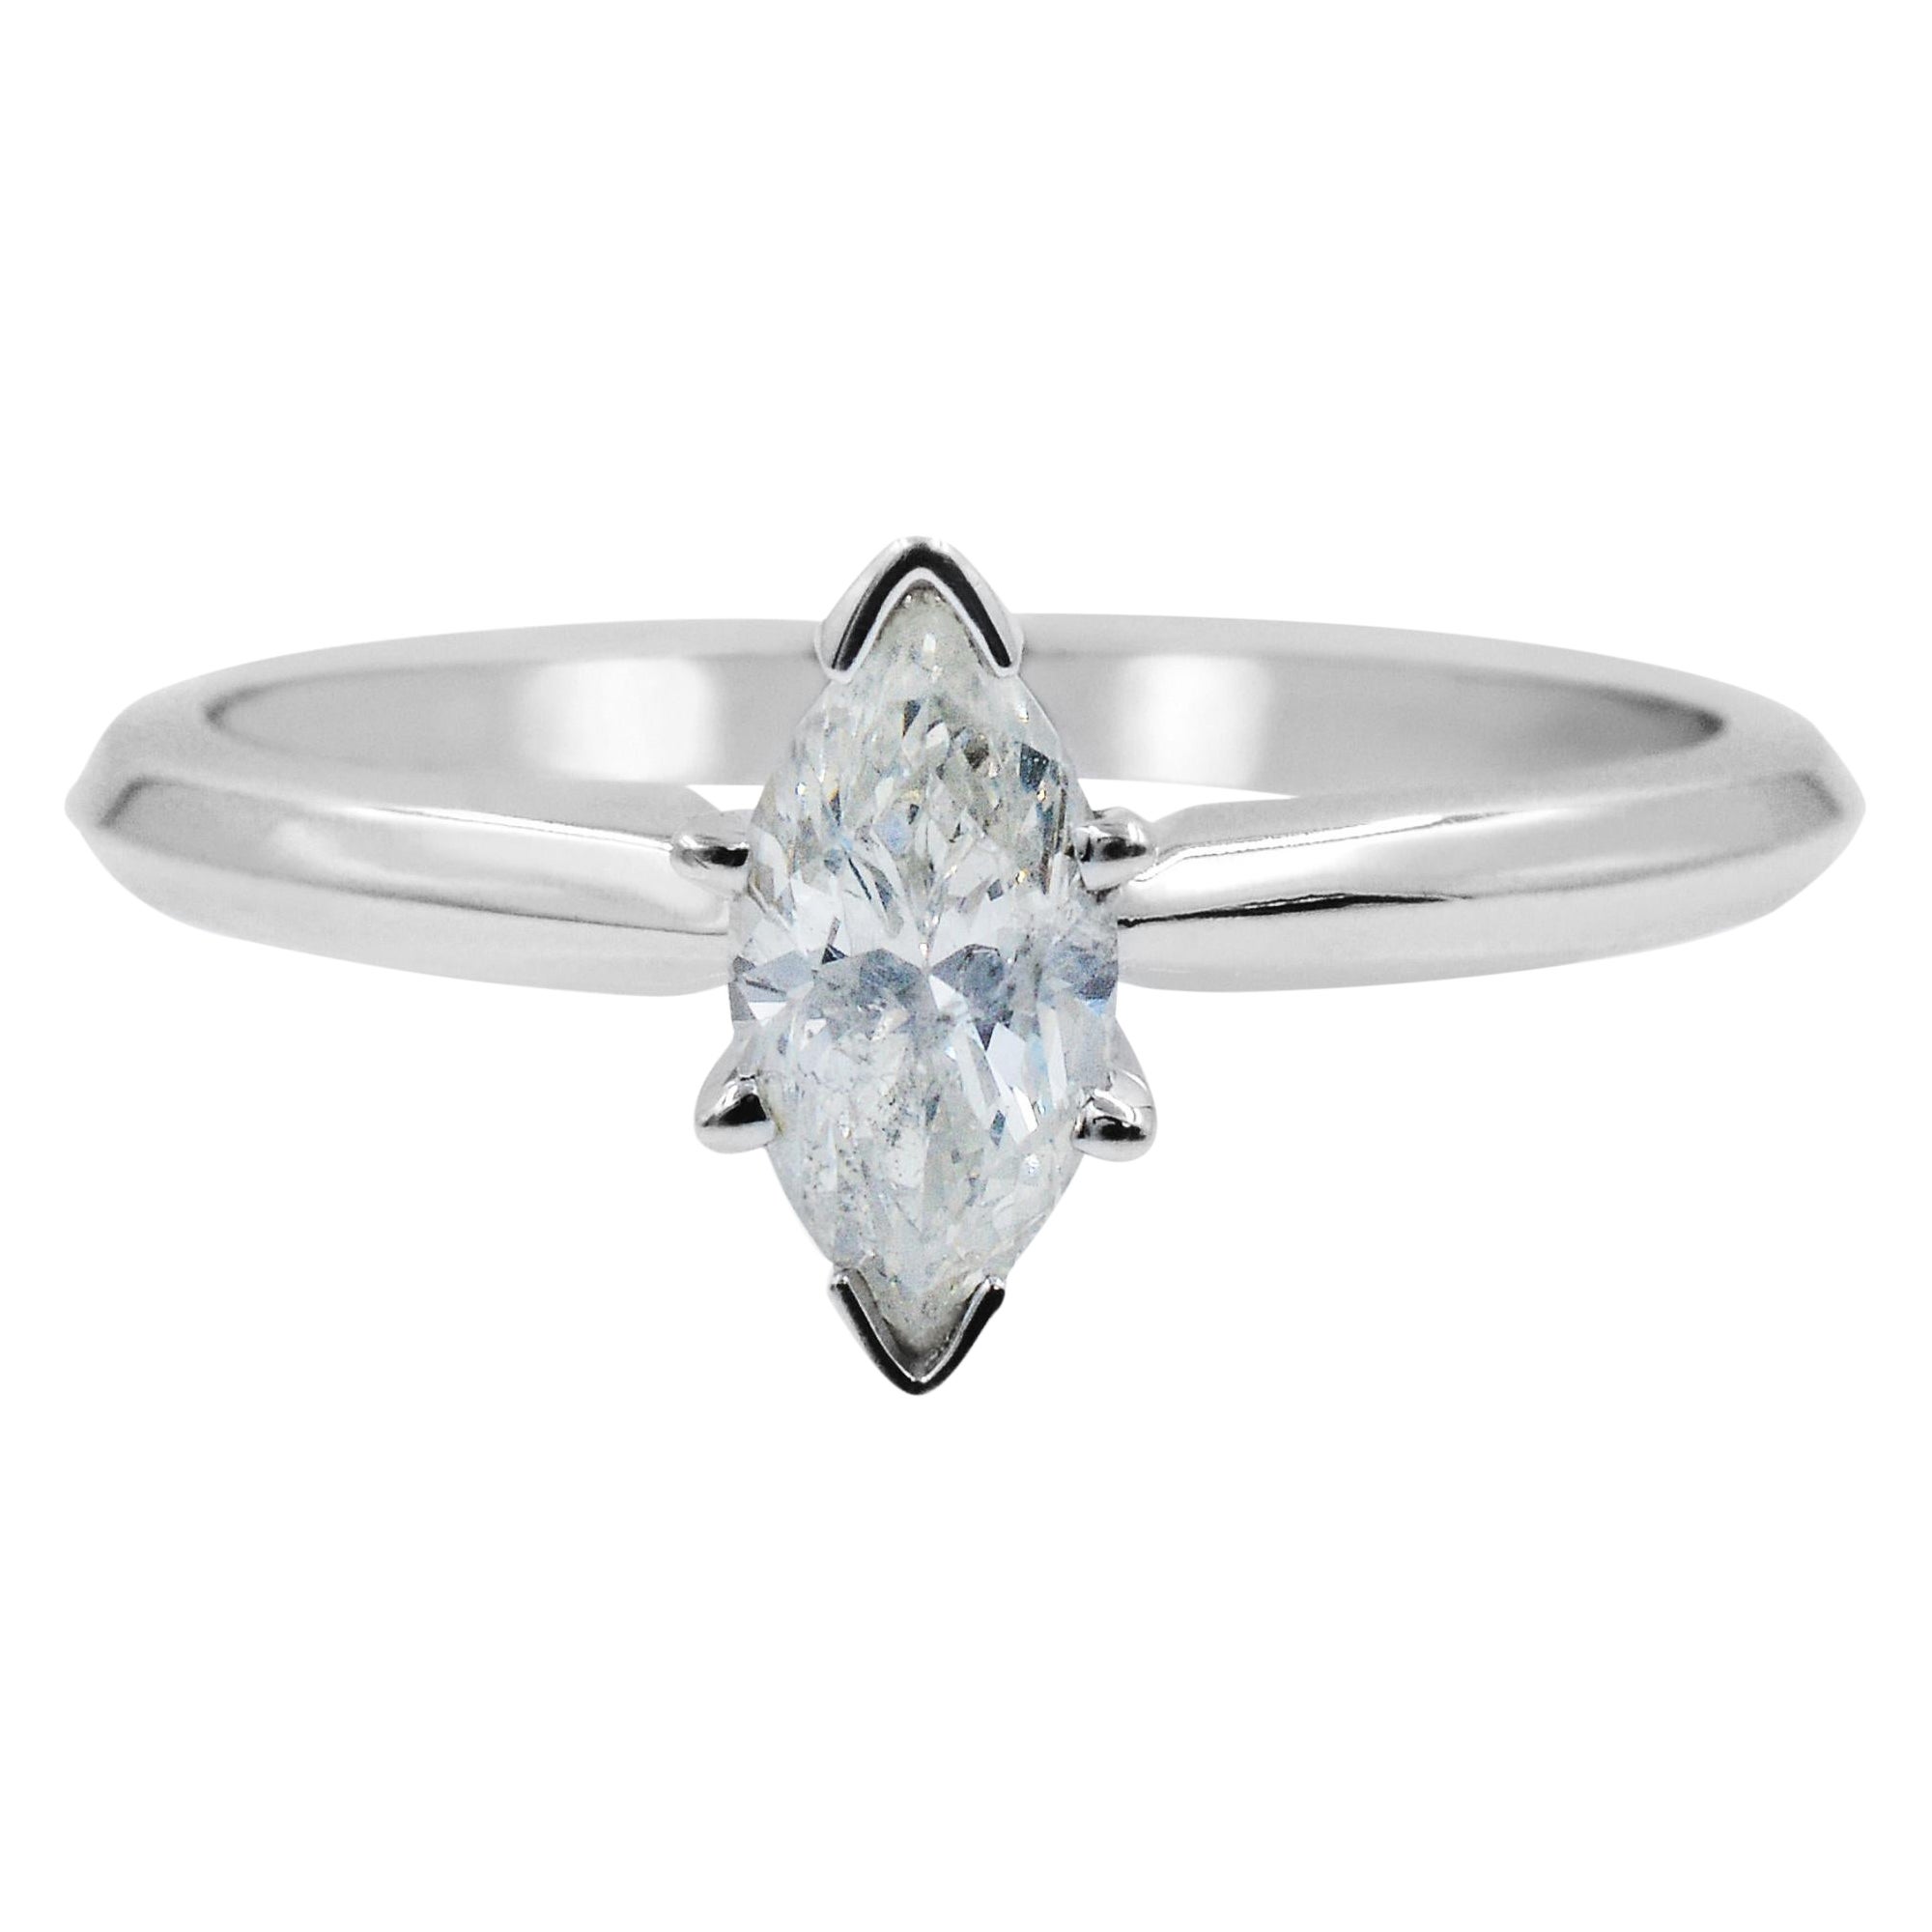 Rachel Koen Marquise Cut Diamond Engagement Ring 14K White Gold 0.53Cttw